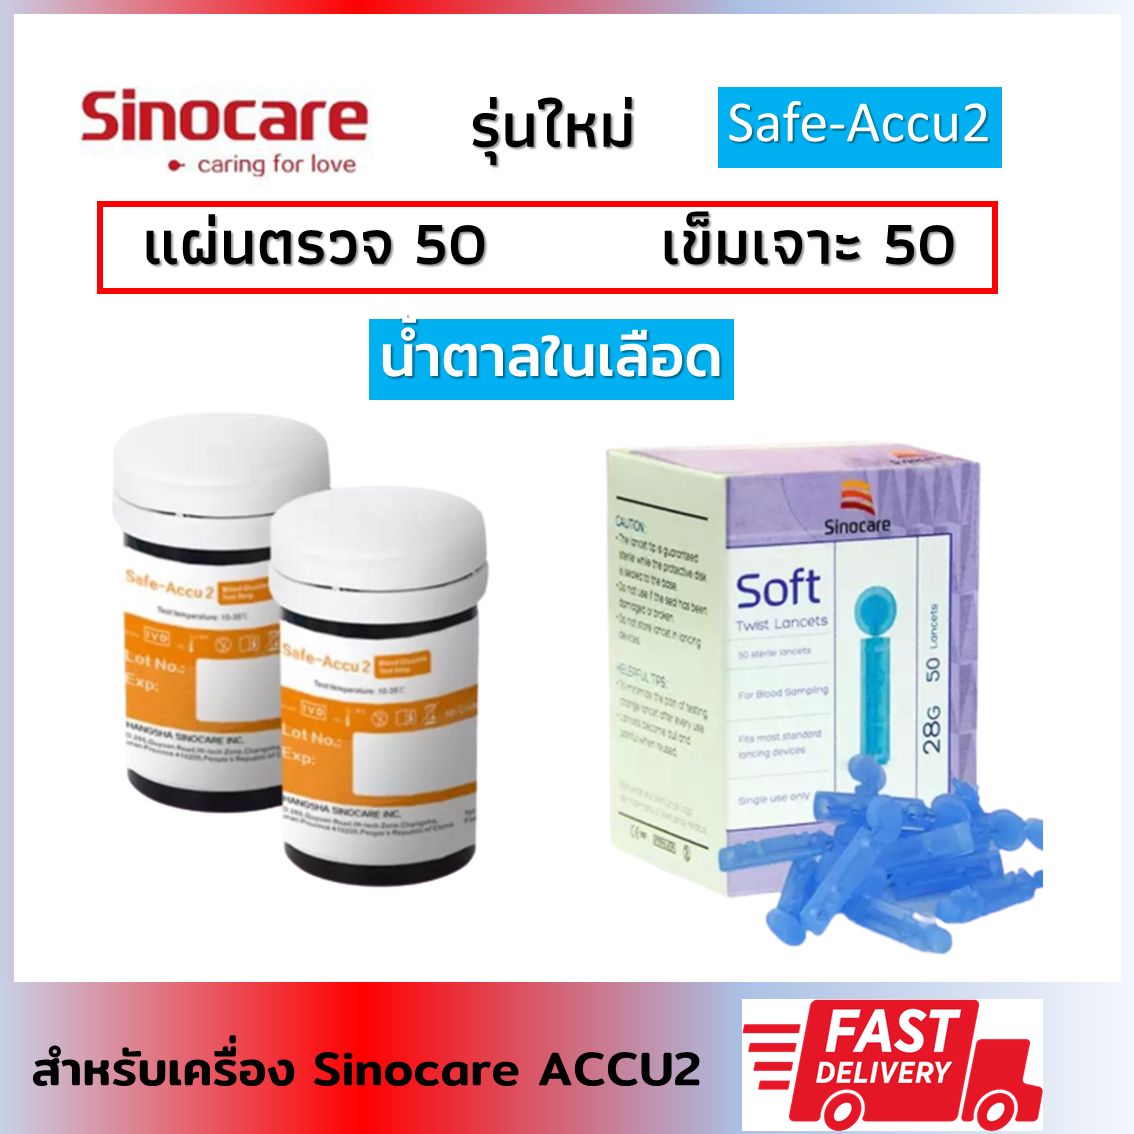 Sinocare แผ่นตรวจน้ำตาล รุ่น Accu2 (ของแท้) แถบวัดน้ำตาล ตรวจเบาหวาน Blood Glucose Test Strip Safe แผ่นเช็คน้ำตาล 50 ชุด เข็มเจาะเลือด 50 ชุด